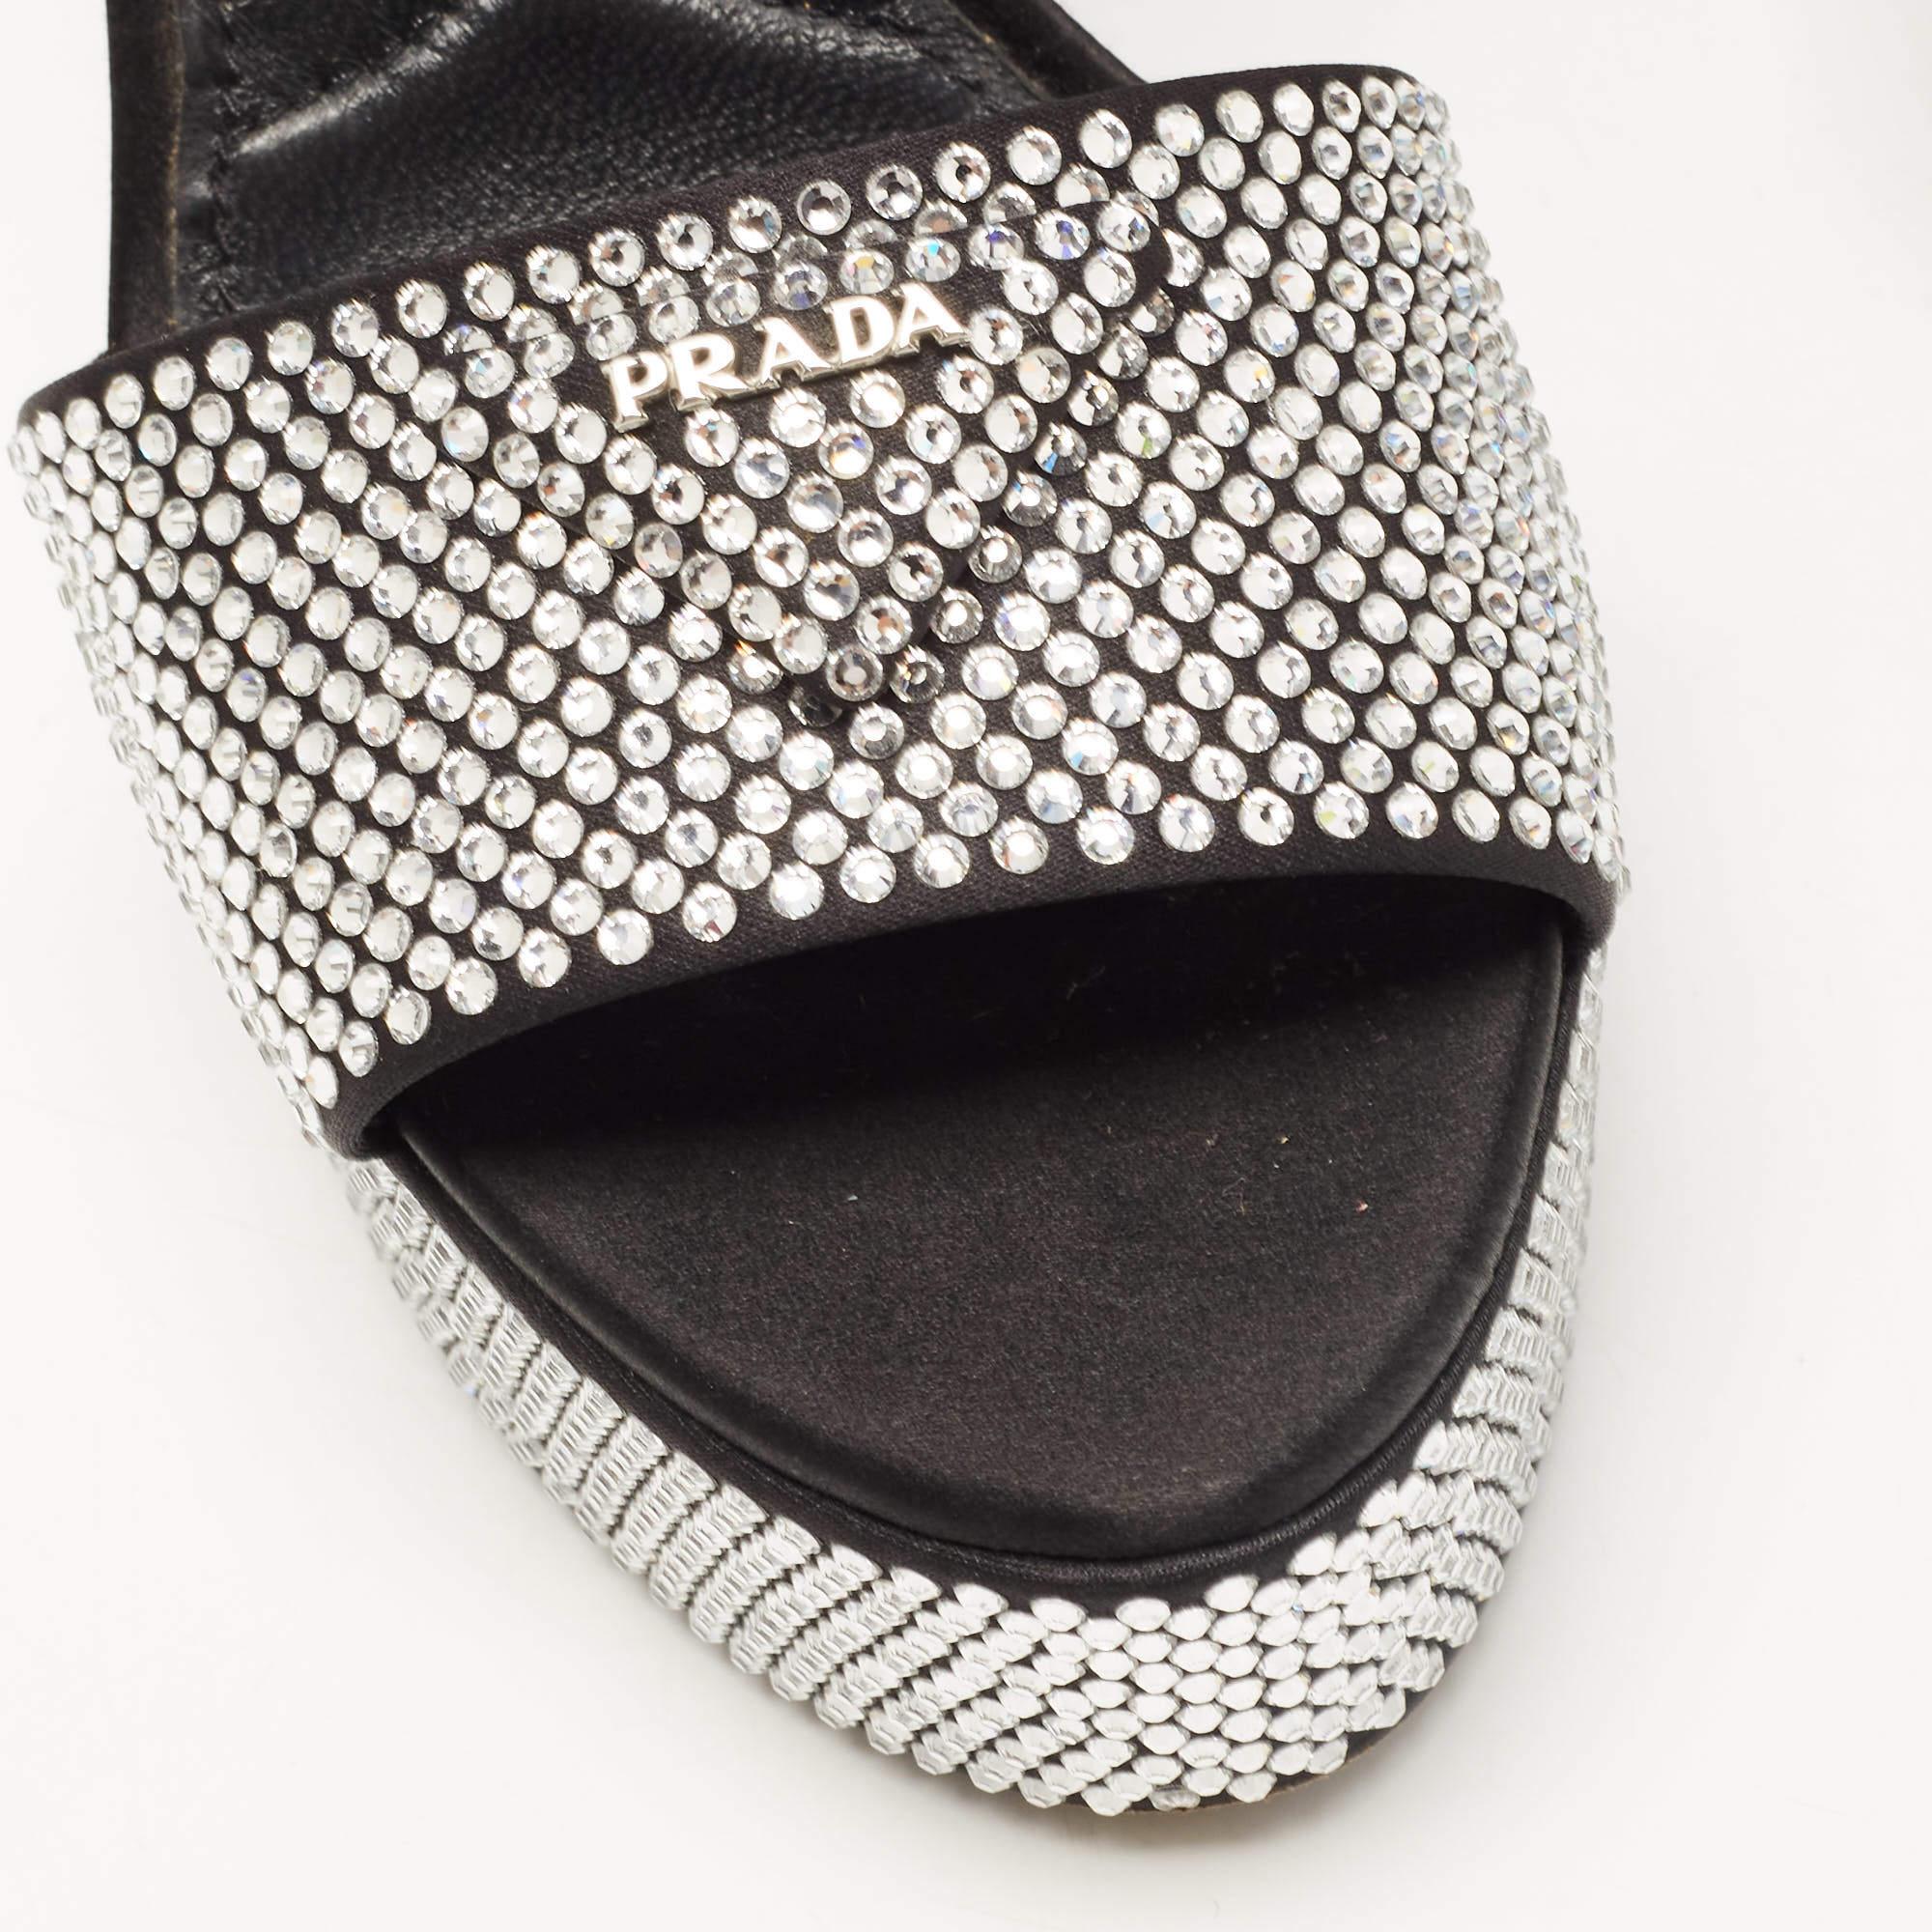 Prada Black/Silver Satin and Crystals Platform Sandals Size 39.5 4